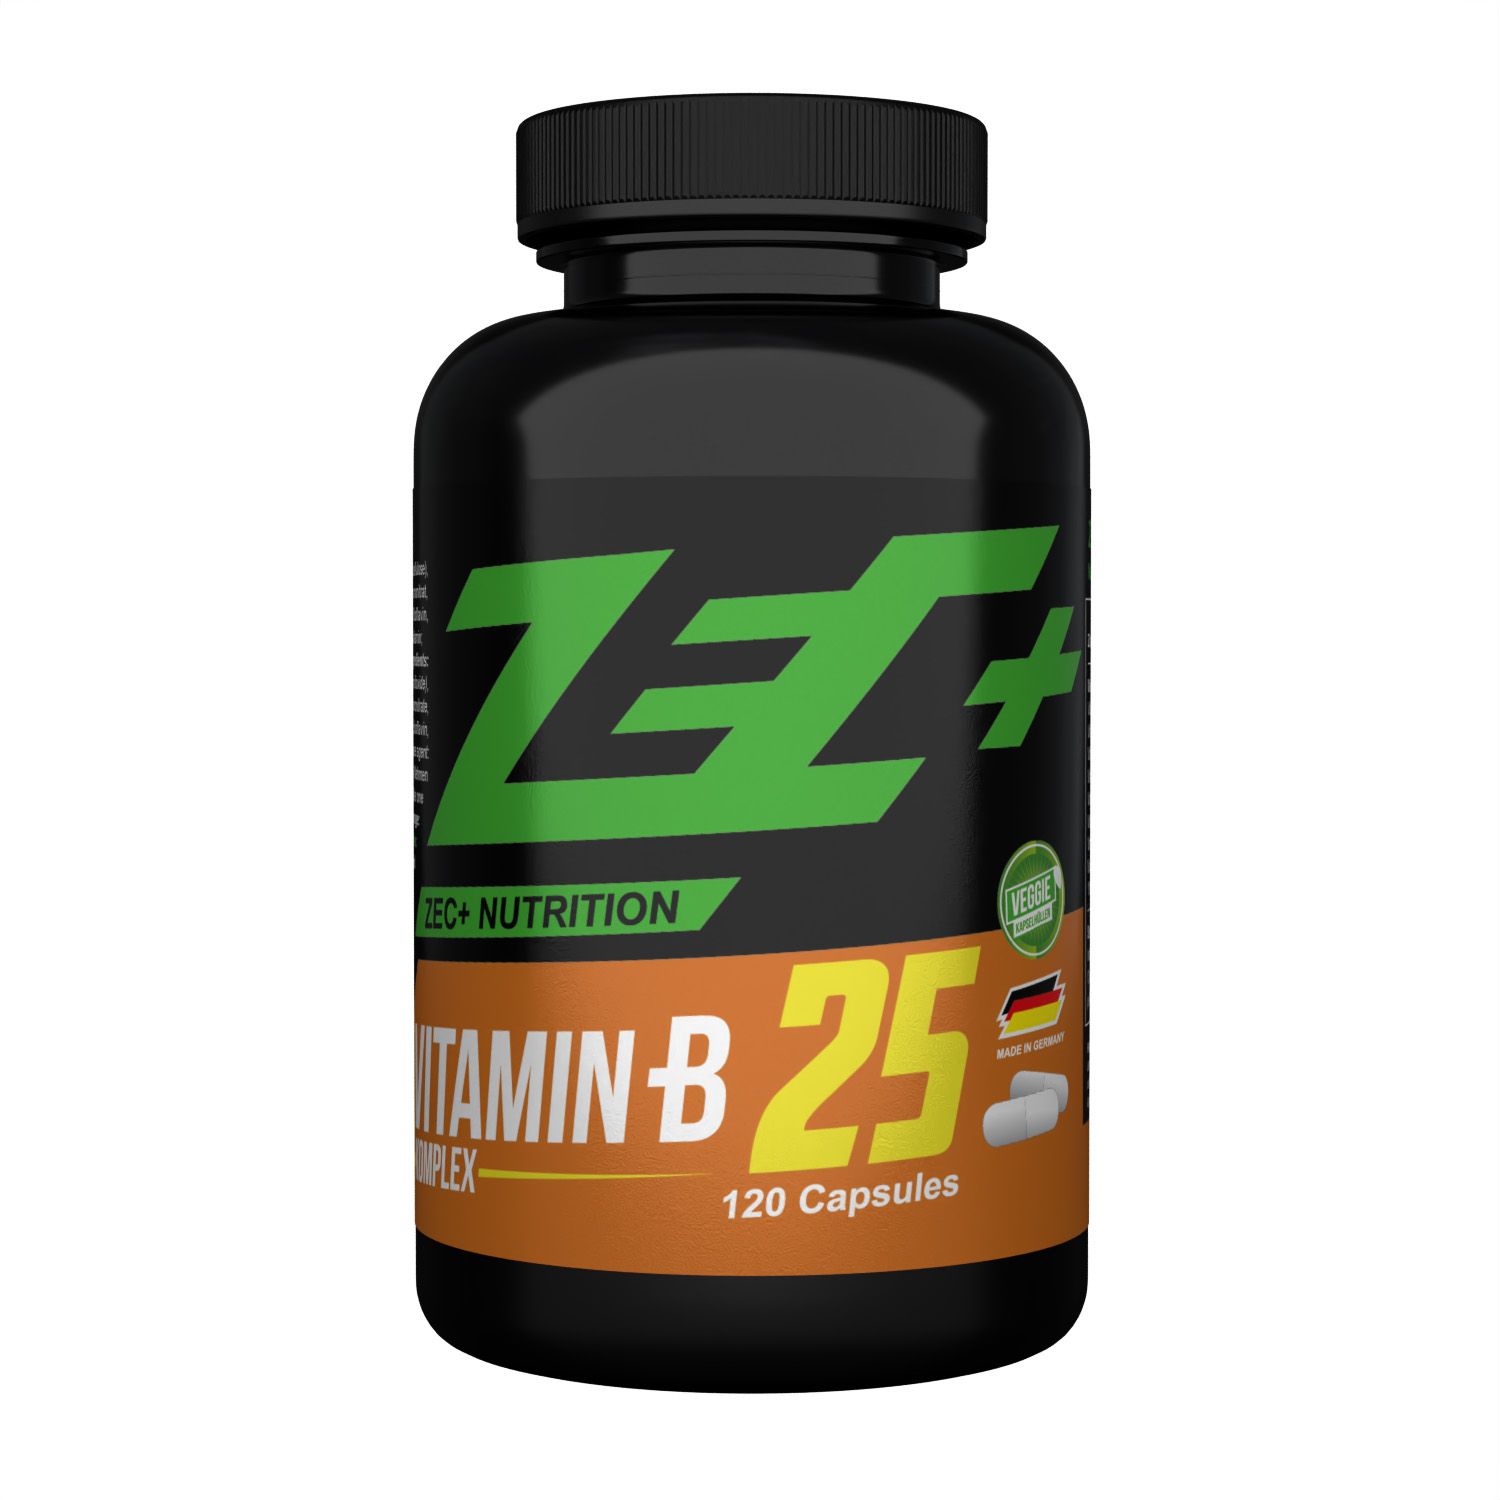 Zec+ Vitamin B 25